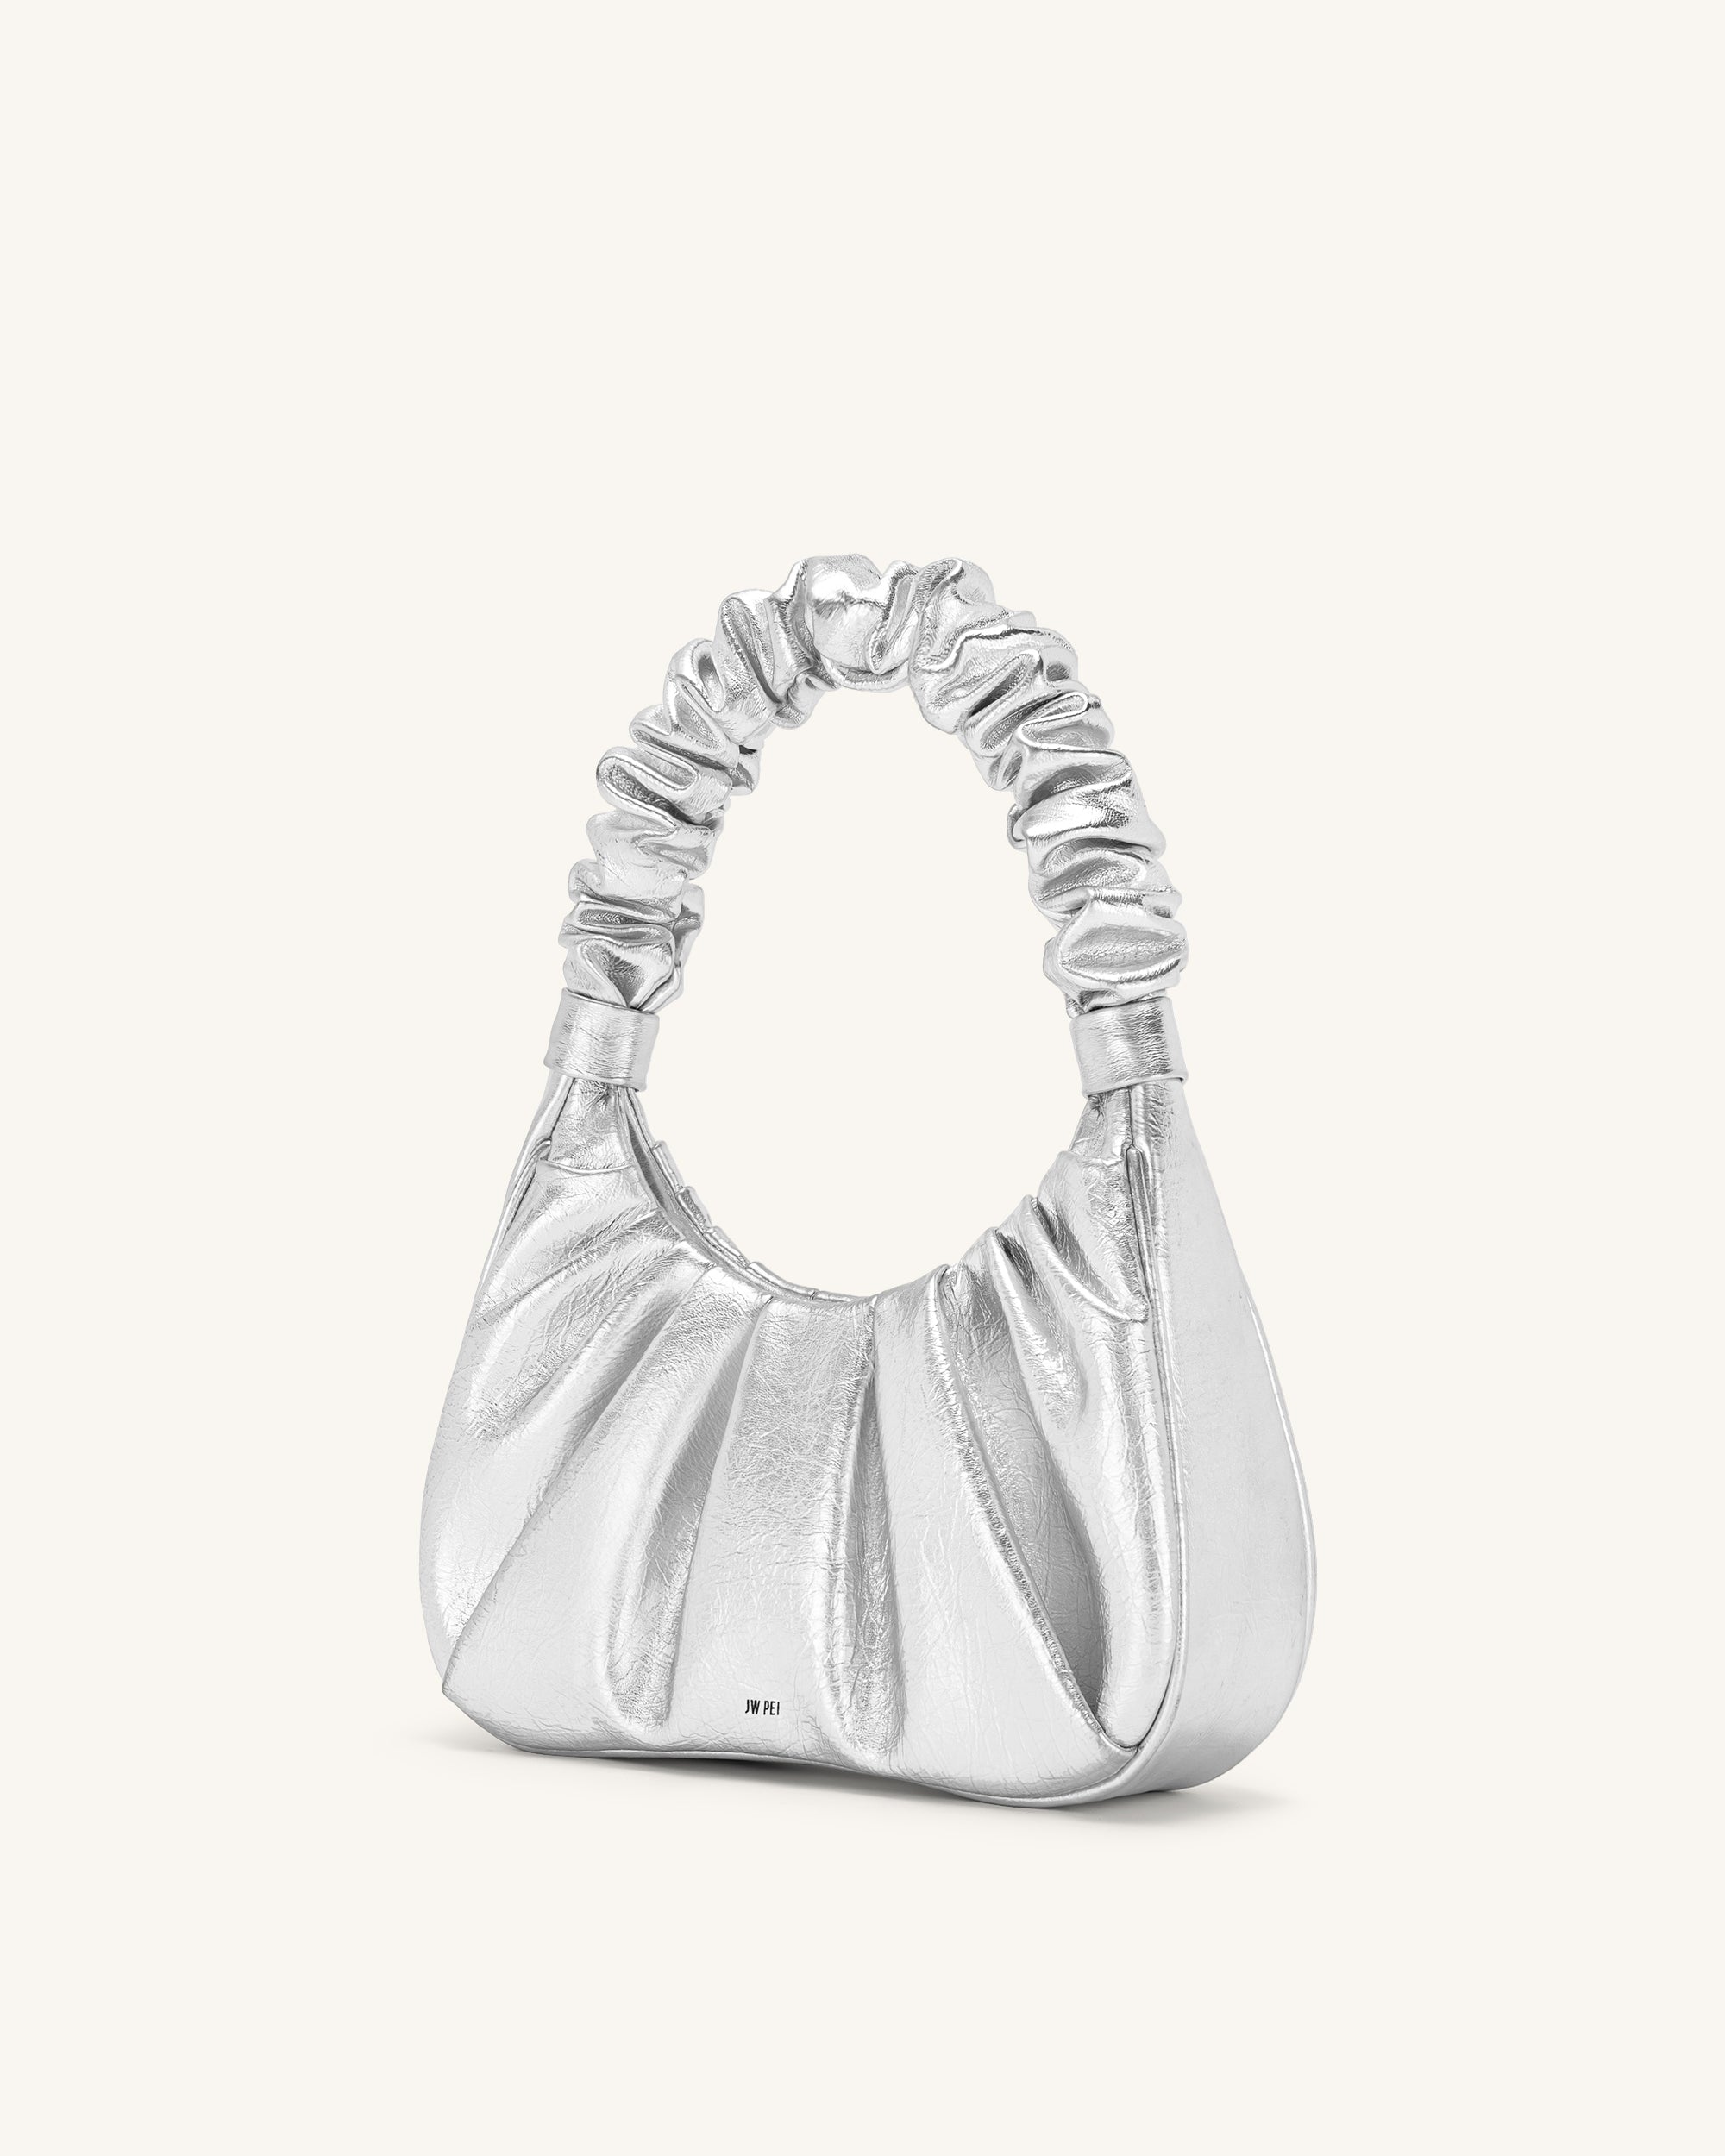 JW Pei Women's Gabbi Ruched Hobo Handbag